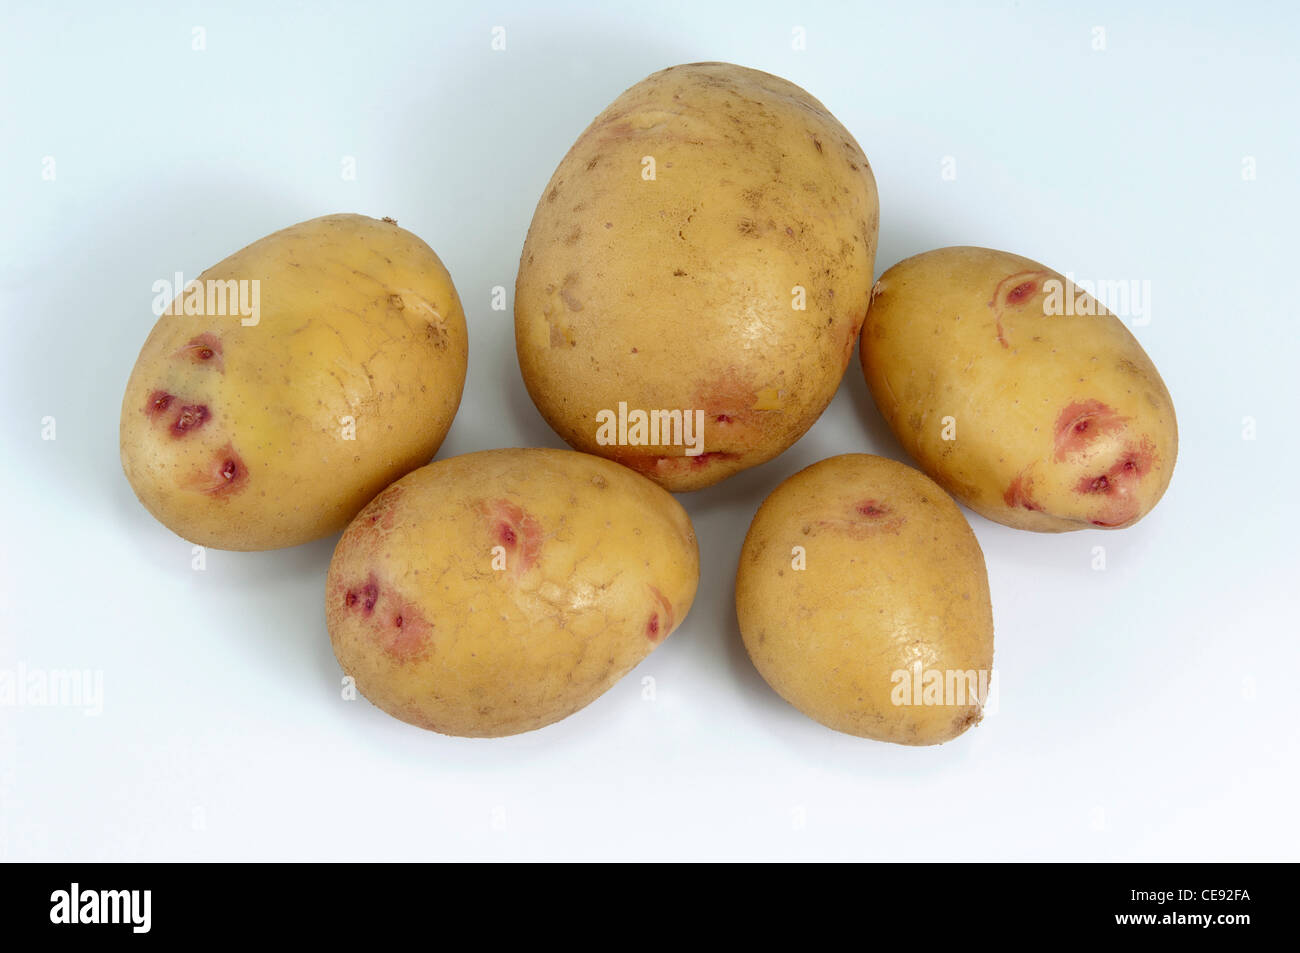 Potato (Solanum tuberosum), variety: Quarta. Washed tubers, studio picture against a white background. Stock Photo